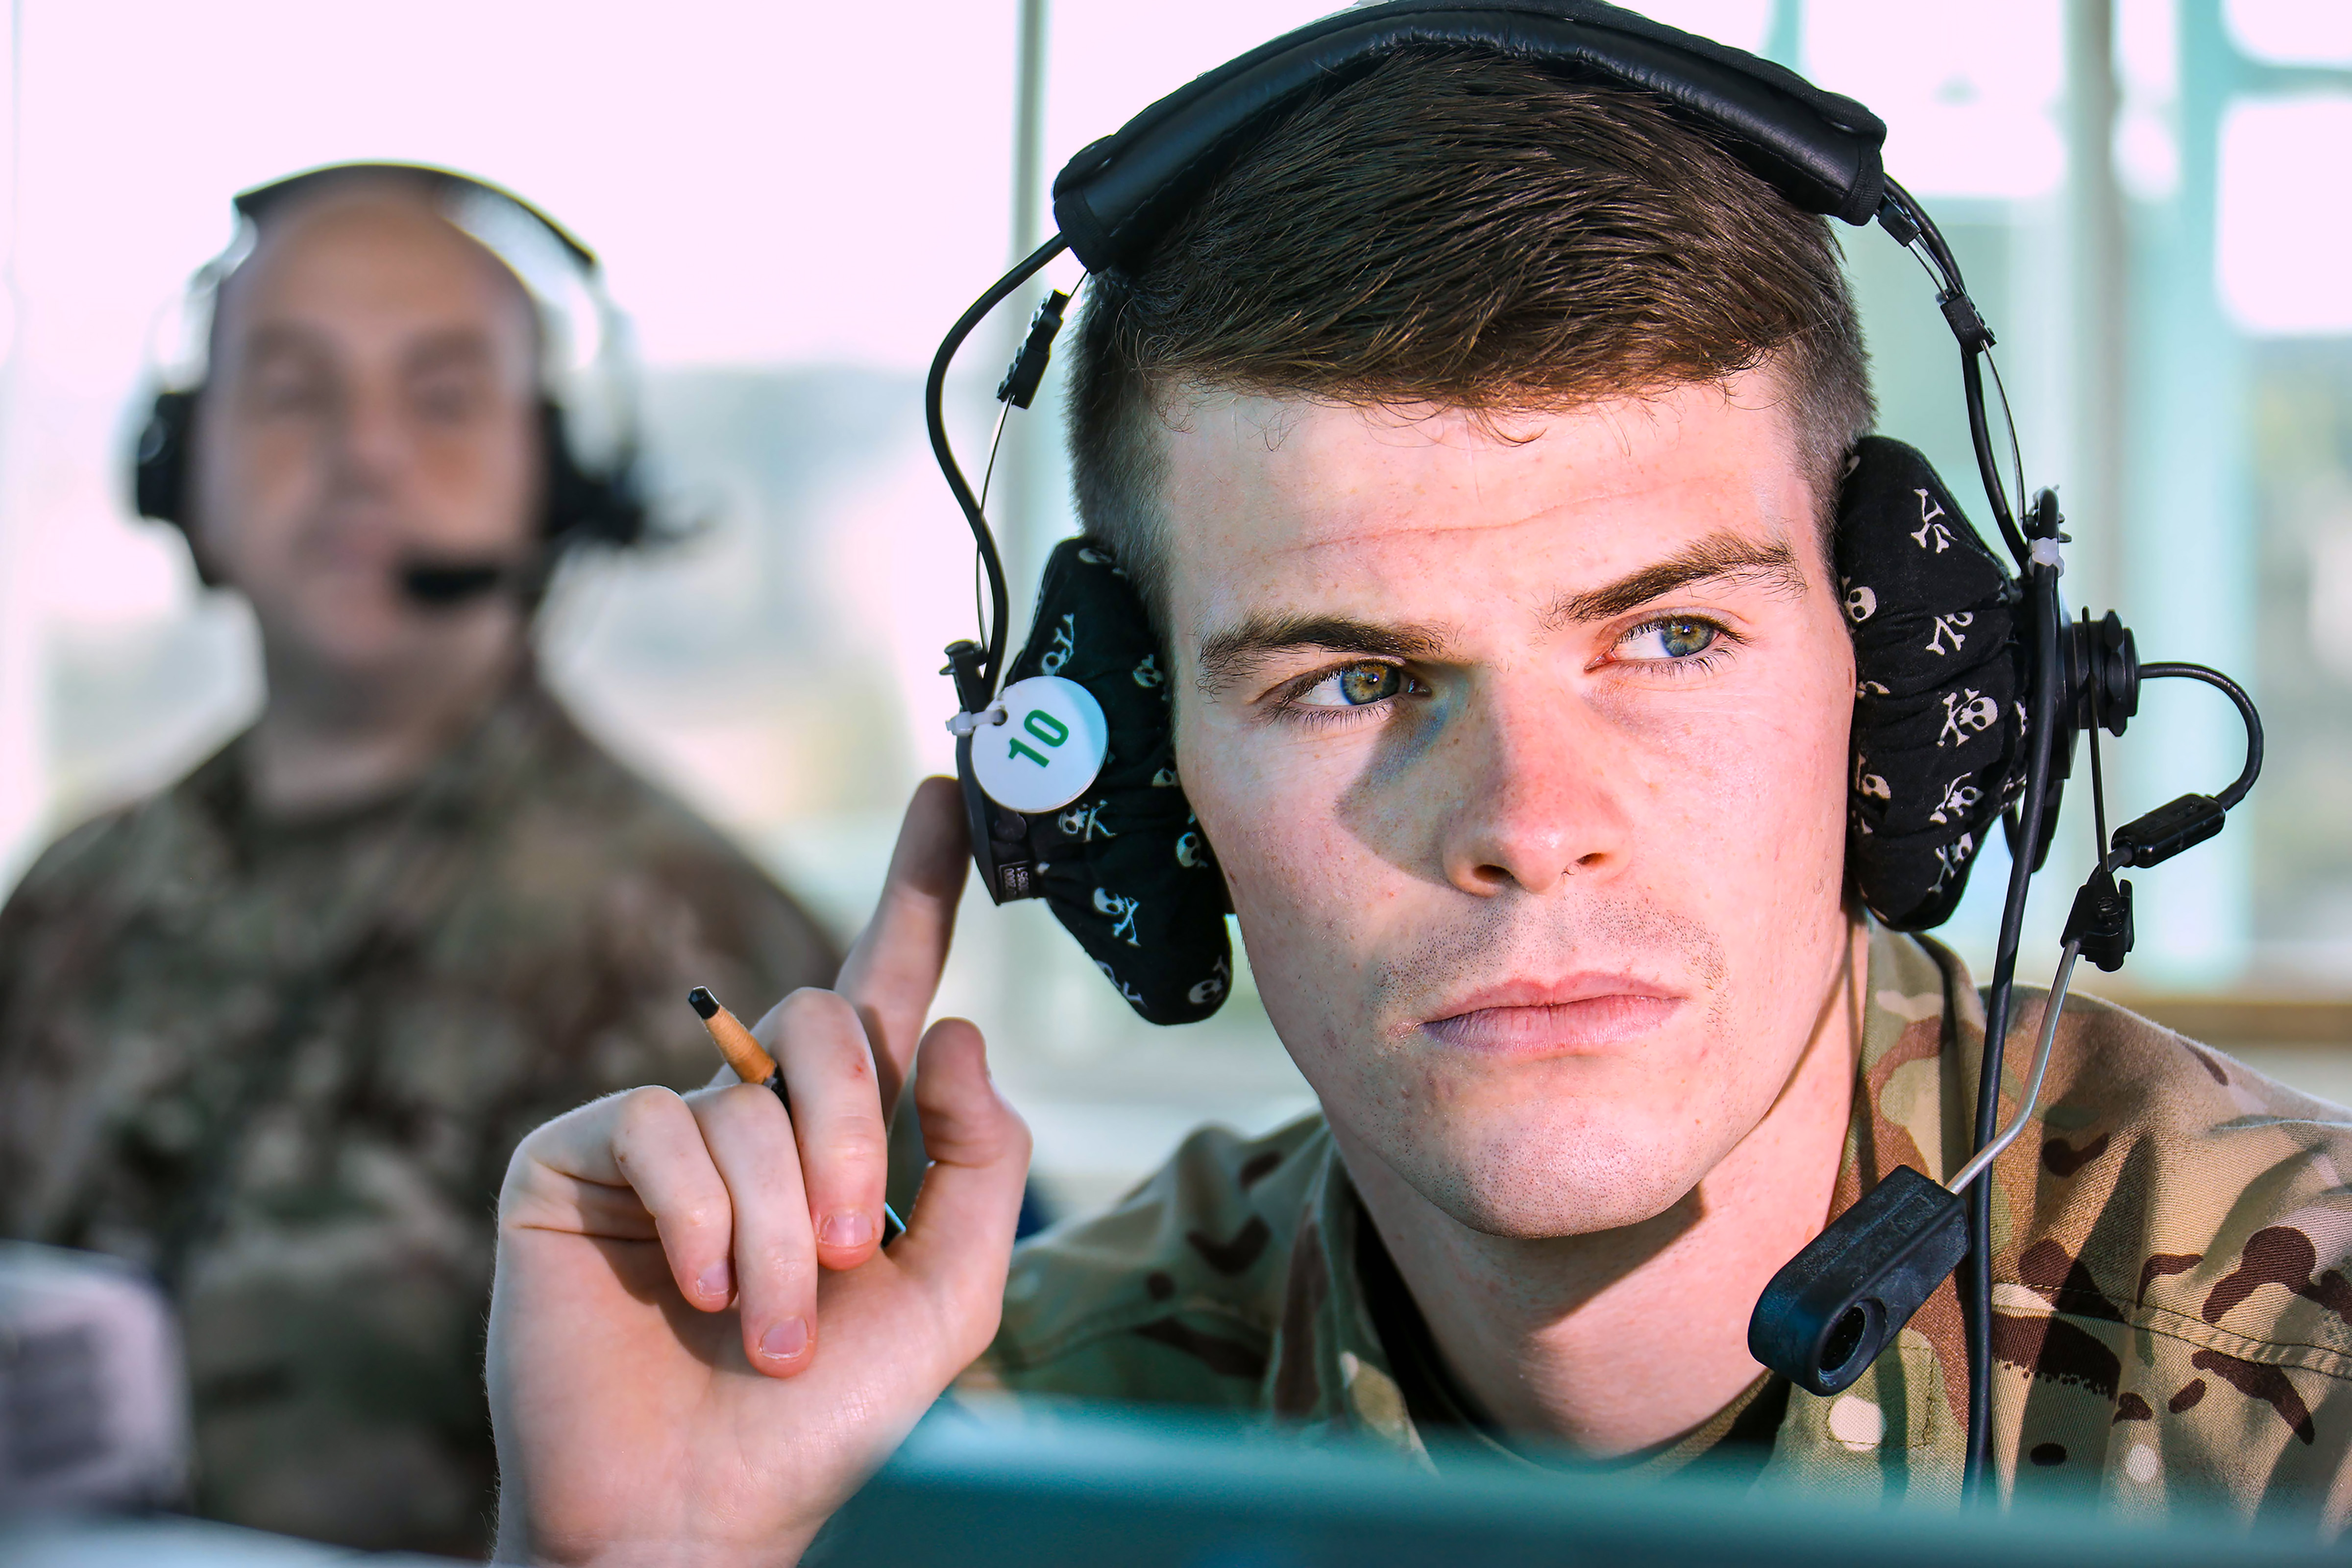 Image shows RAF aviator wearing headset.